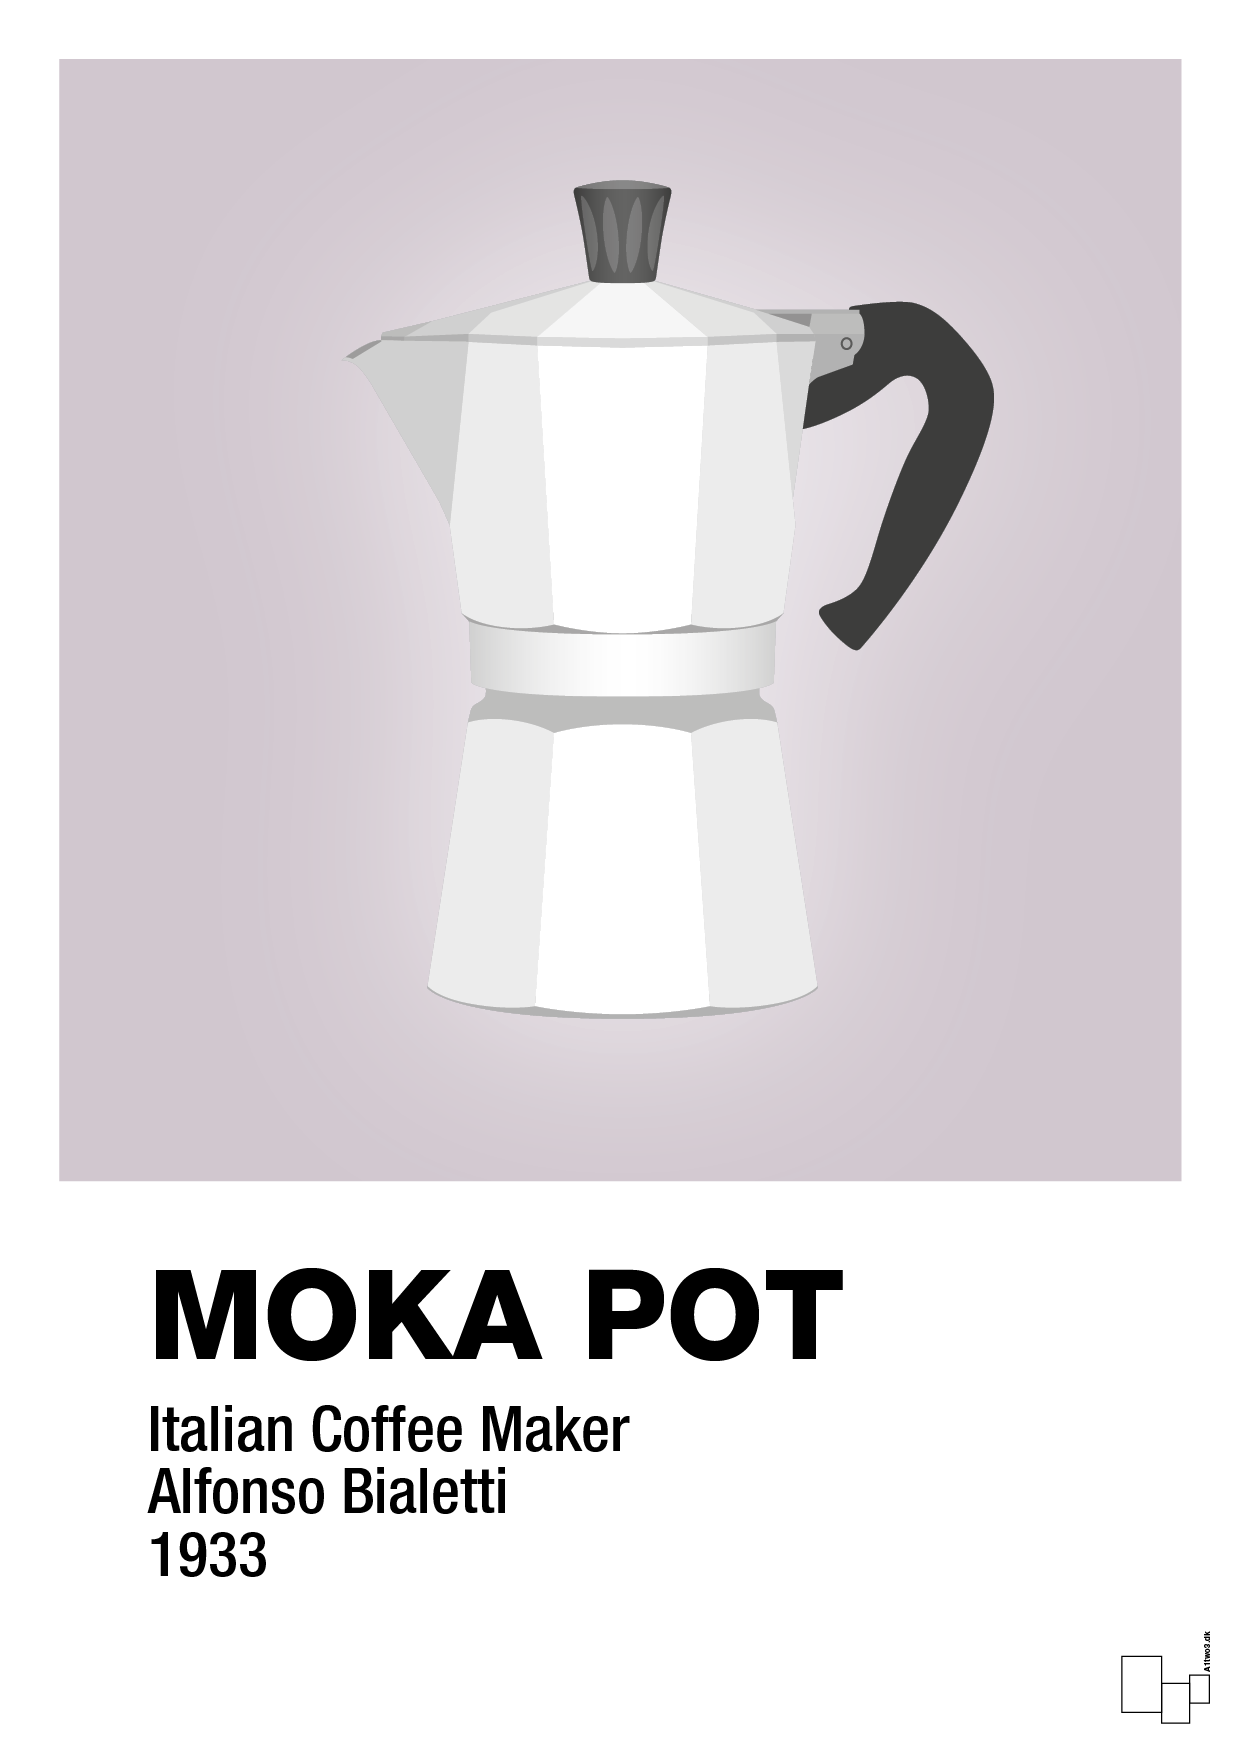 moka pot - Plakat med Mad & Drikke i Dusty Lilac